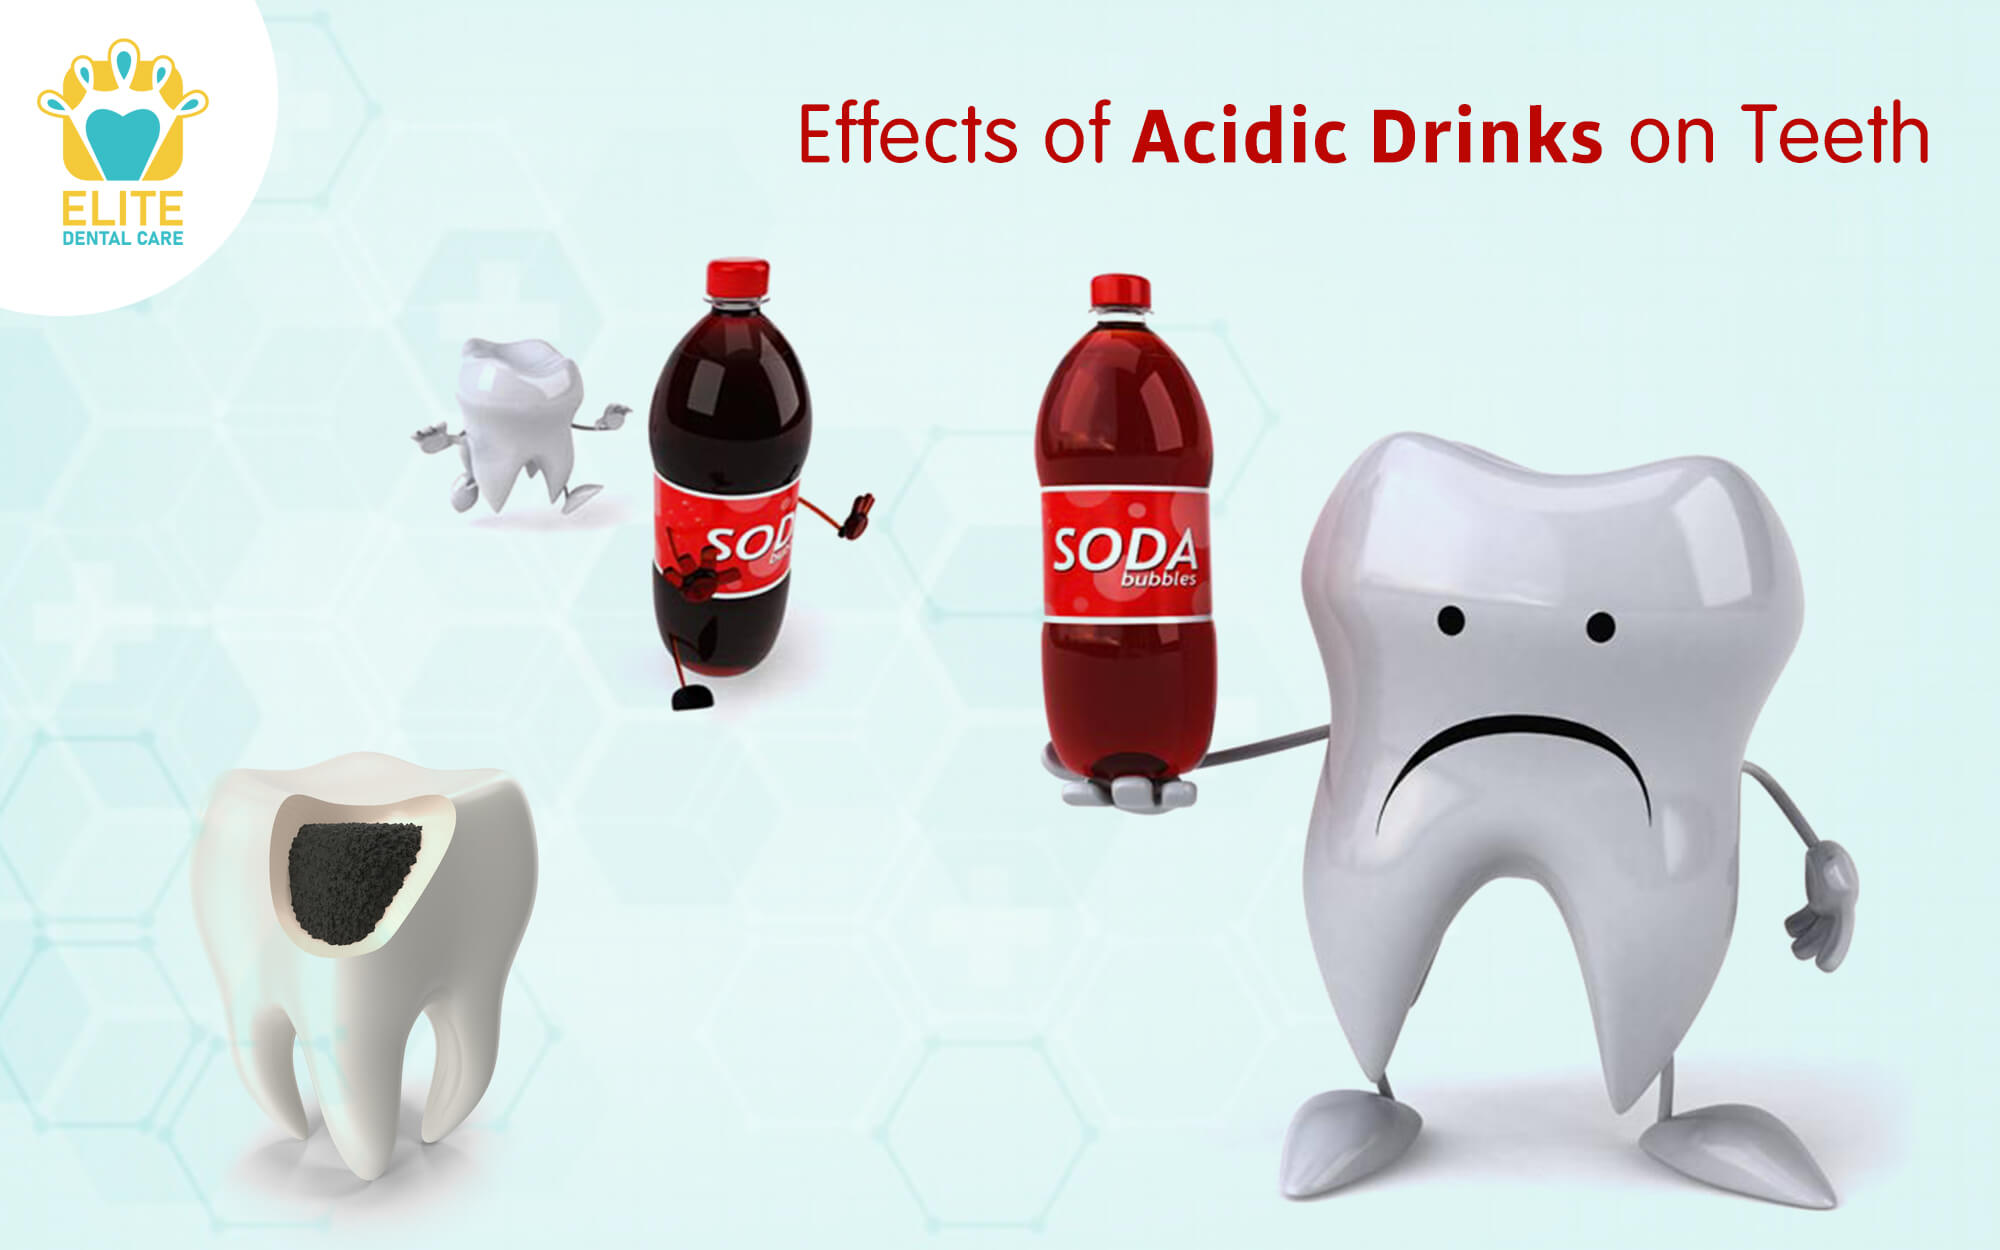 EFFECTS OF ACIDIC DRINKS ON TEETH